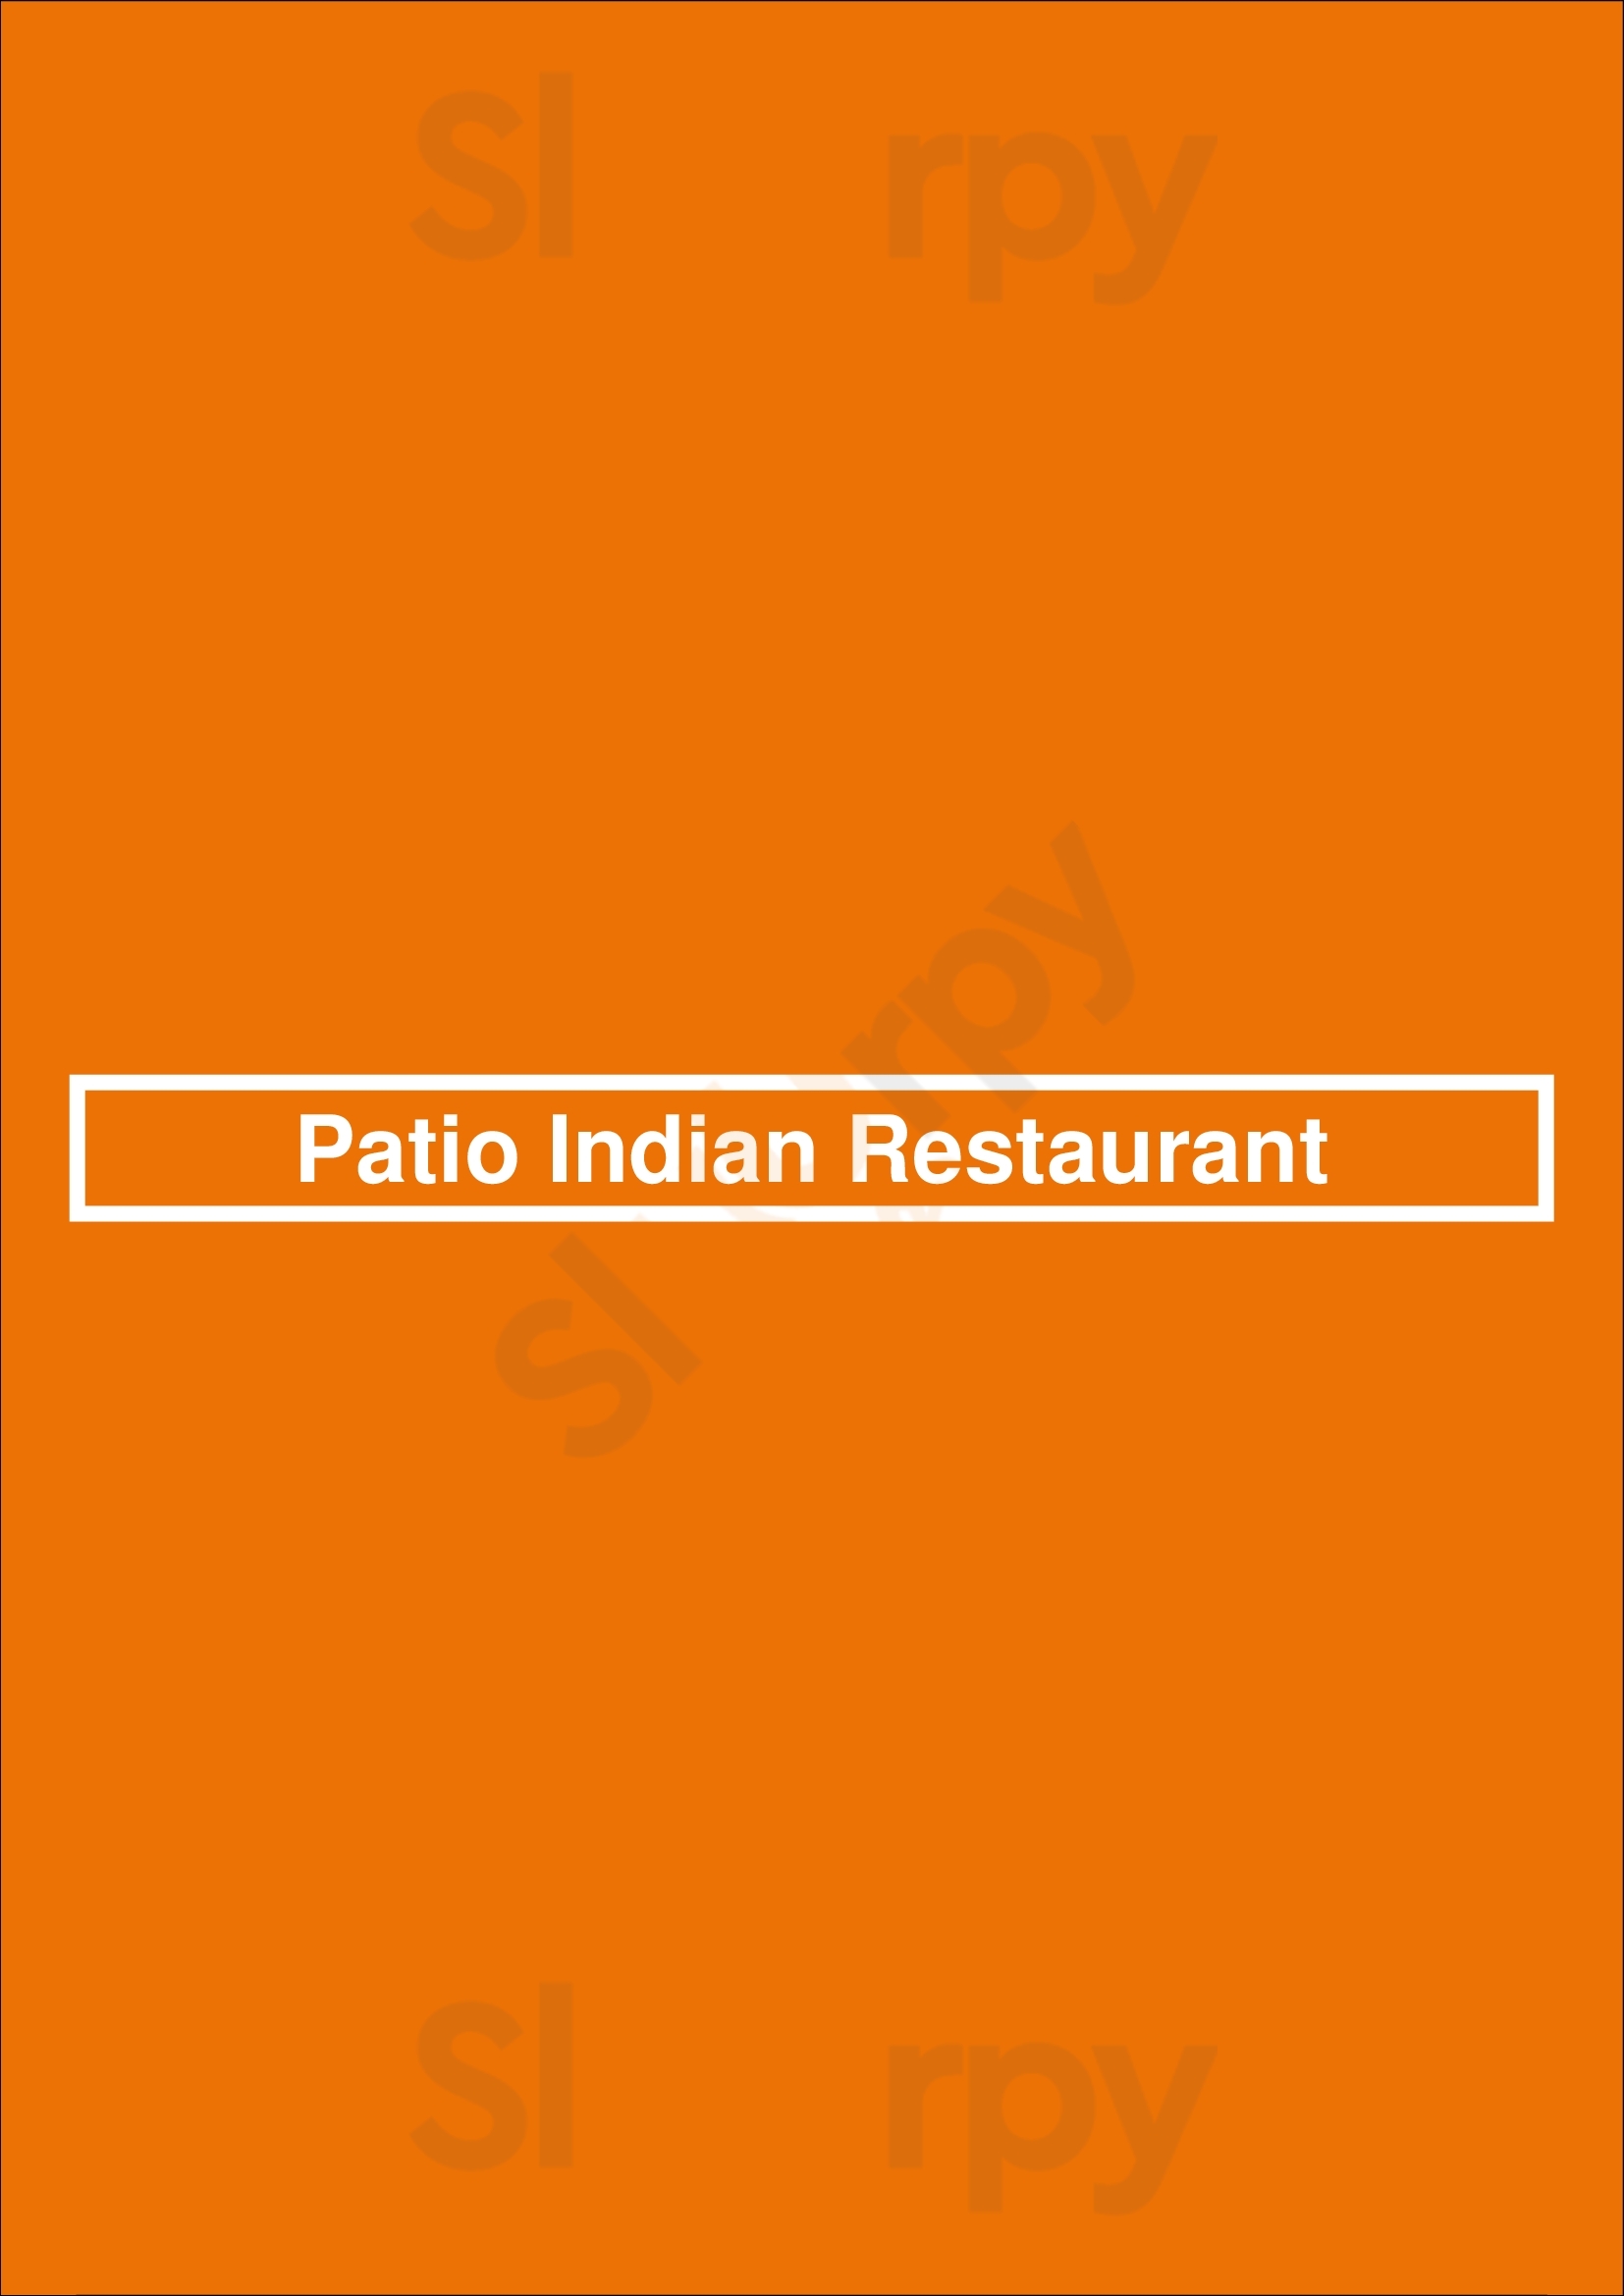 Patio Indian Restaurant Toronto Menu - 1